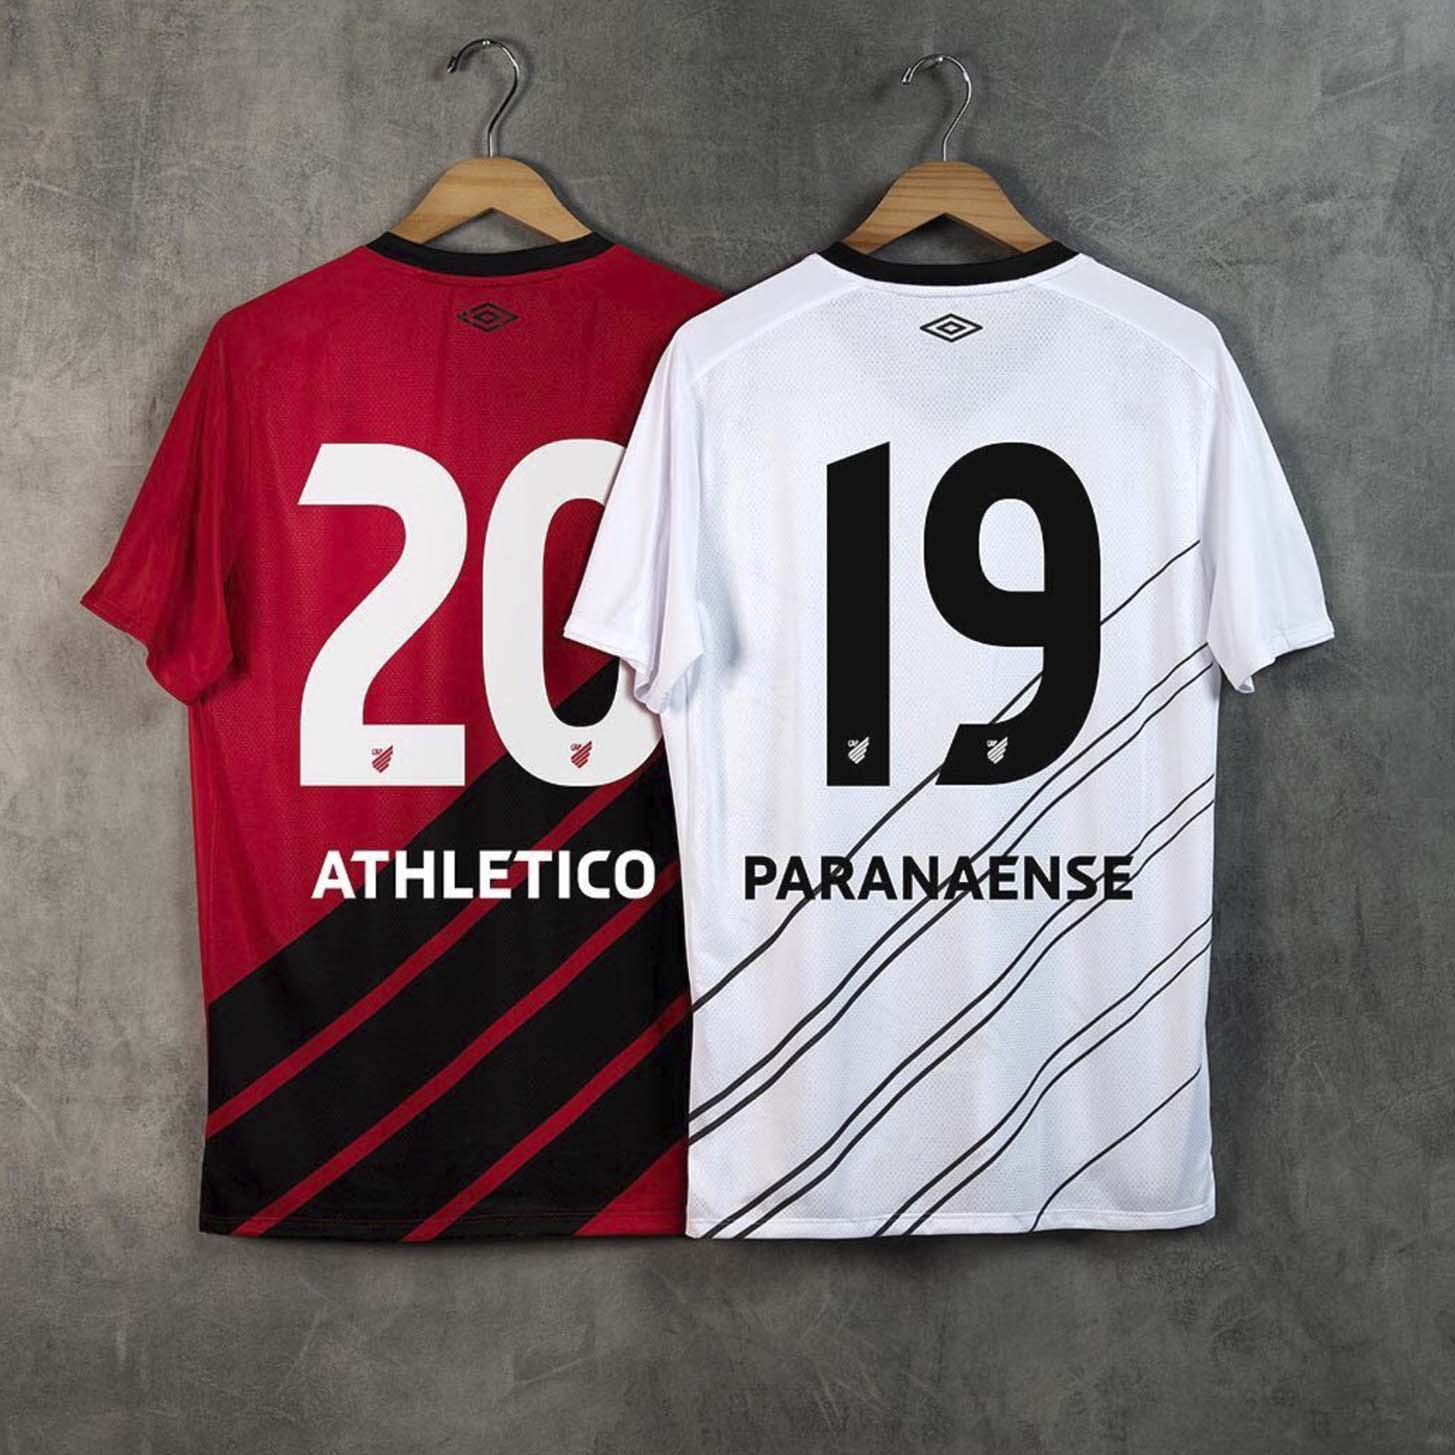 Atletico Paranaense voetbalshirts 2019 - Voetbalshirts.com